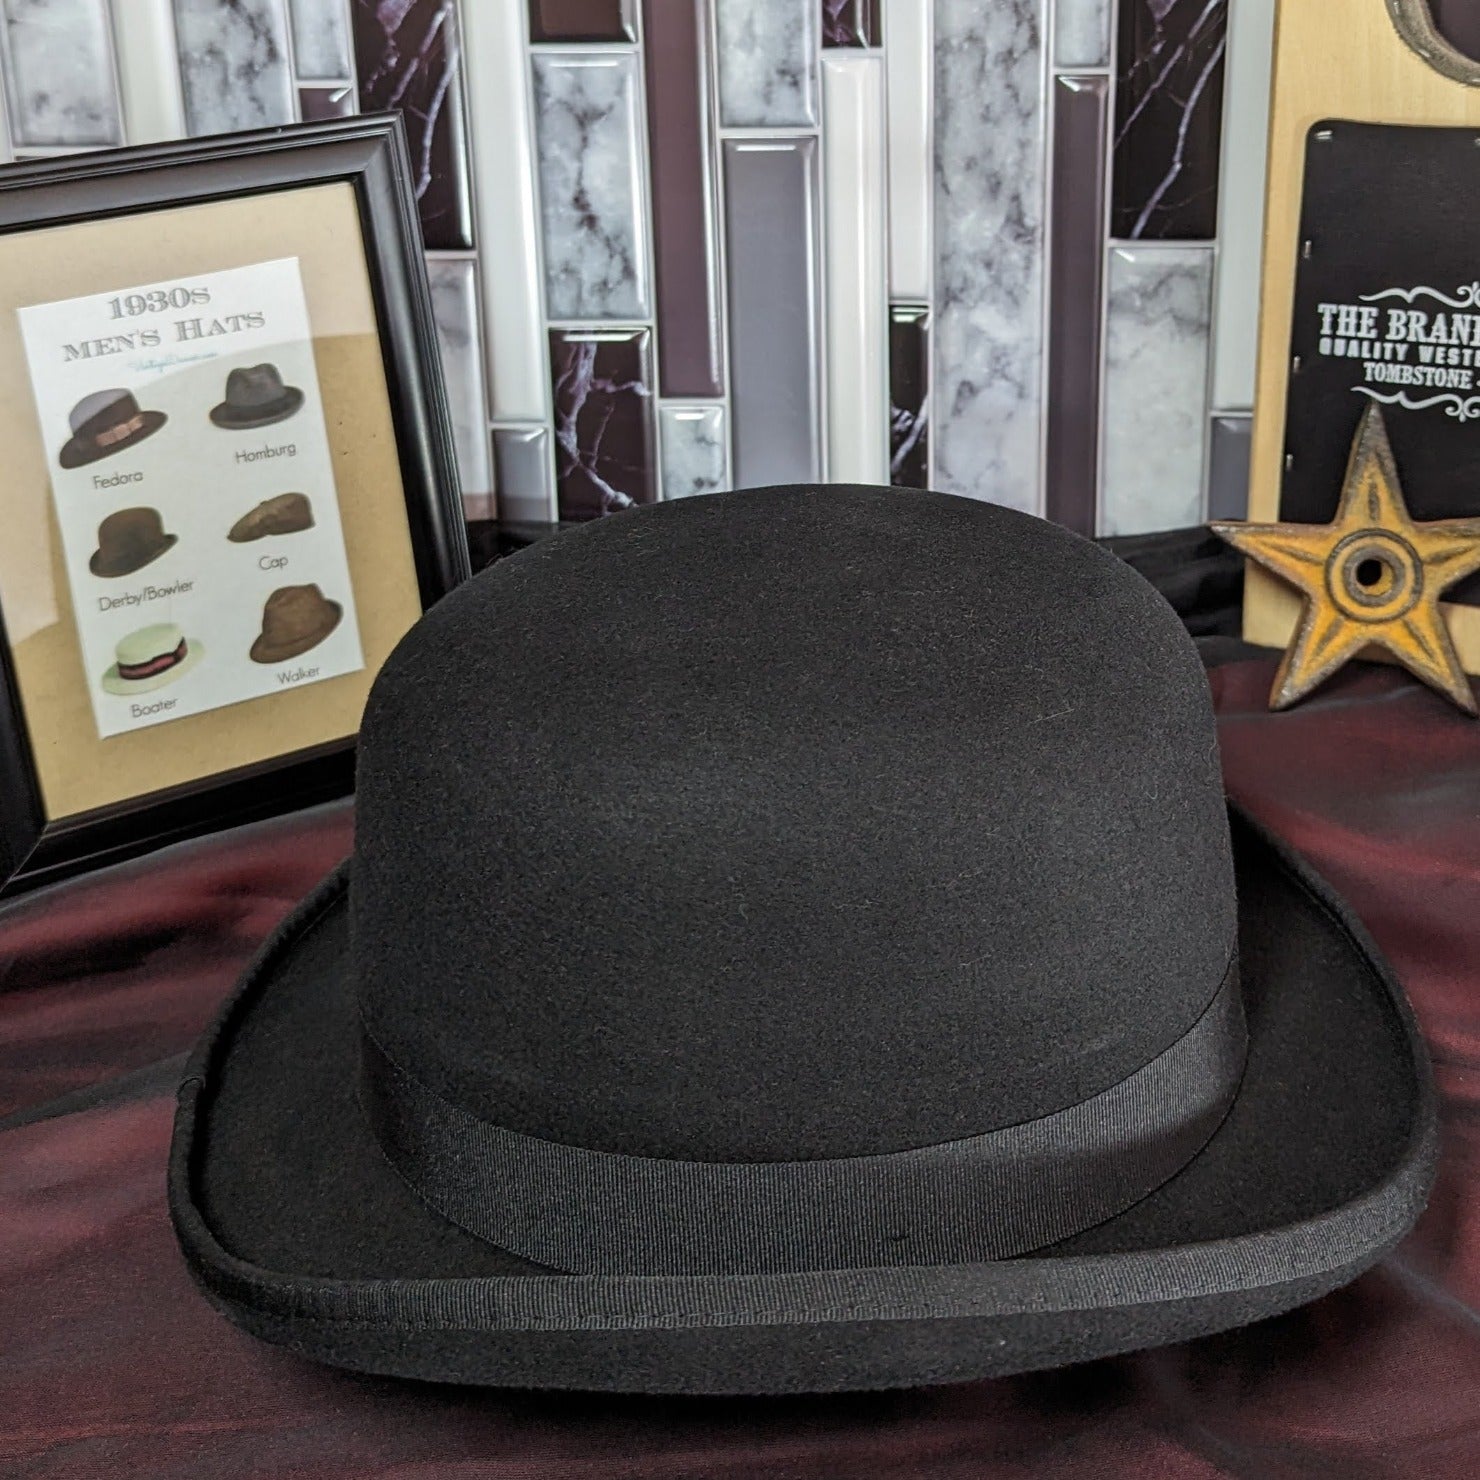 Stacy Adams Wool Felt Homburg Hat - Black Derby & Bowler Hats